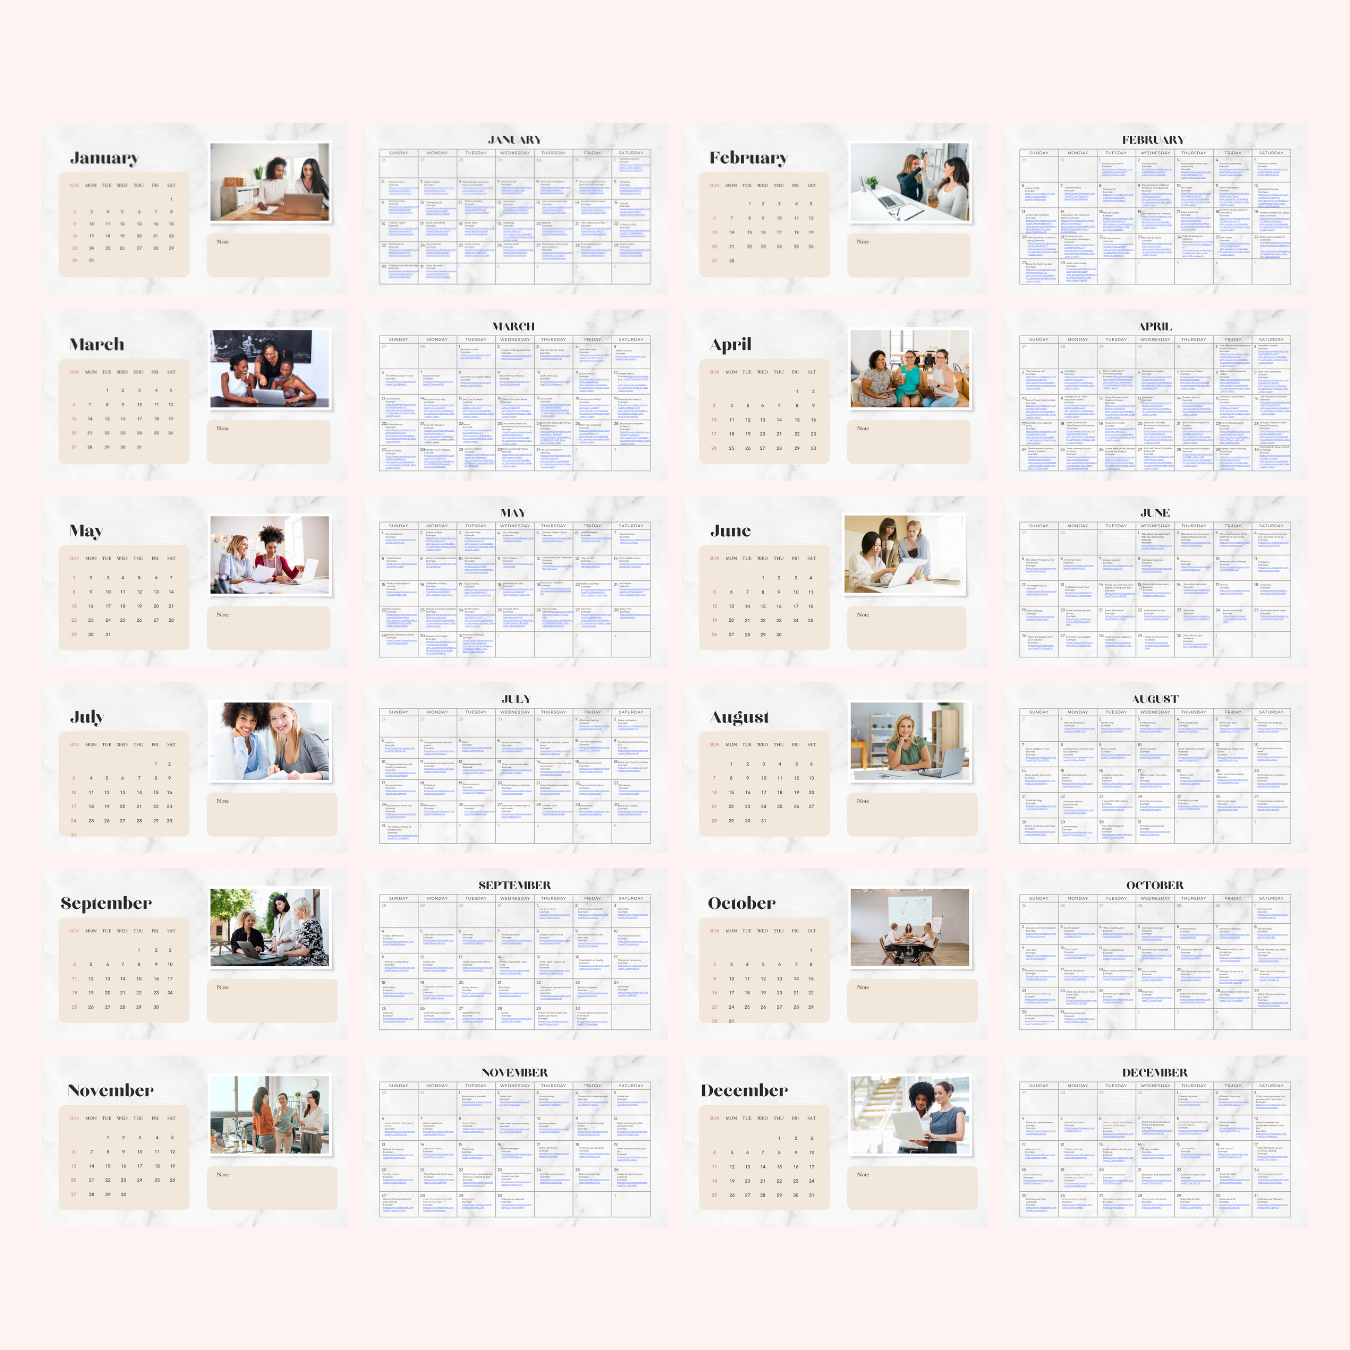 With Examples - 365 Viral Video Calendar For Instagram Reels & TikTok